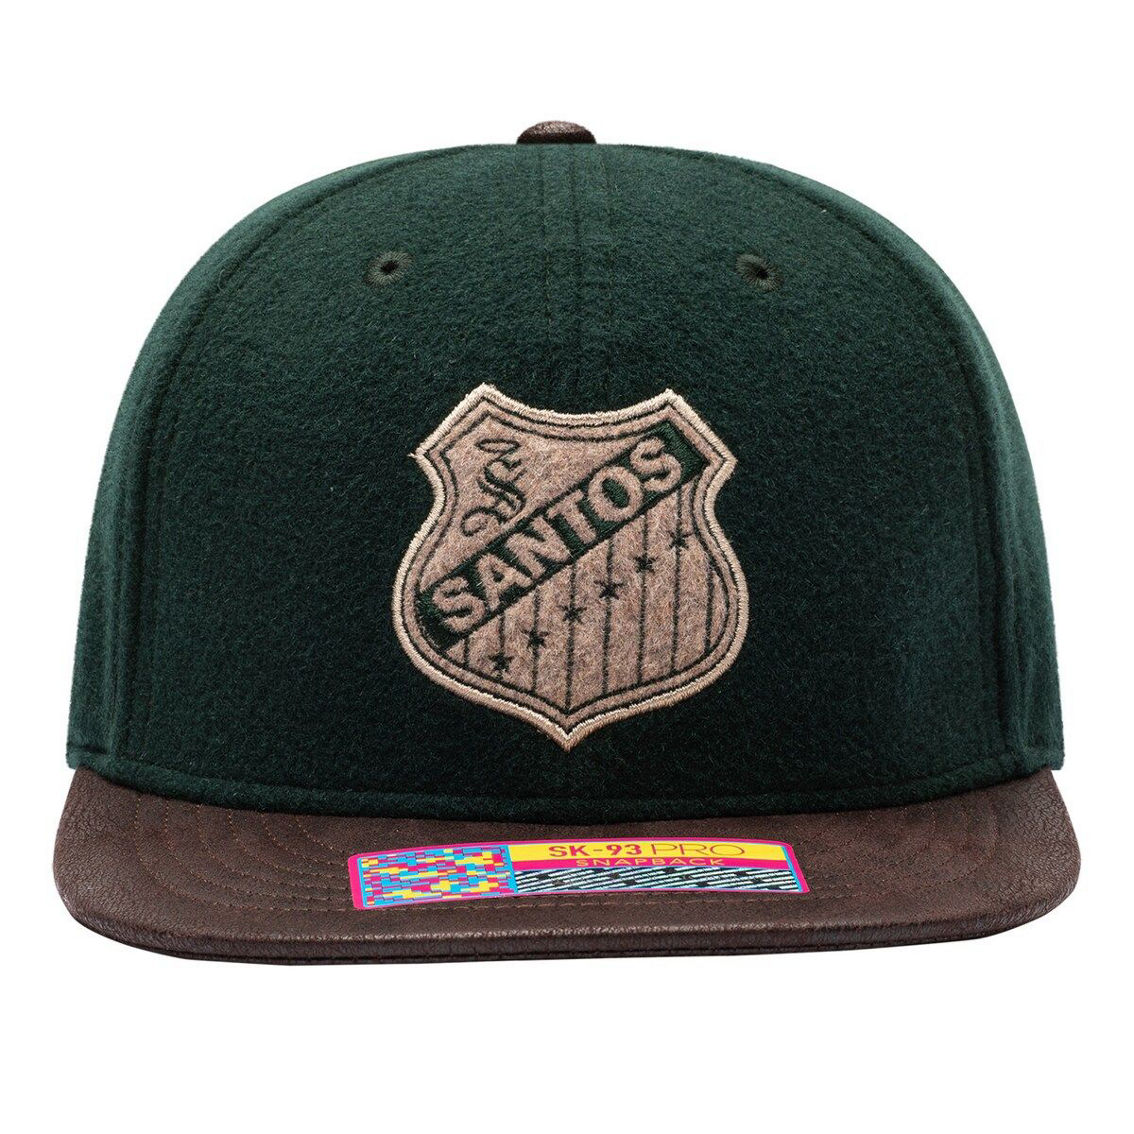 Fan Ink Men's Green/Brown Santos Laguna Prep Snapback Hat - Image 3 of 4